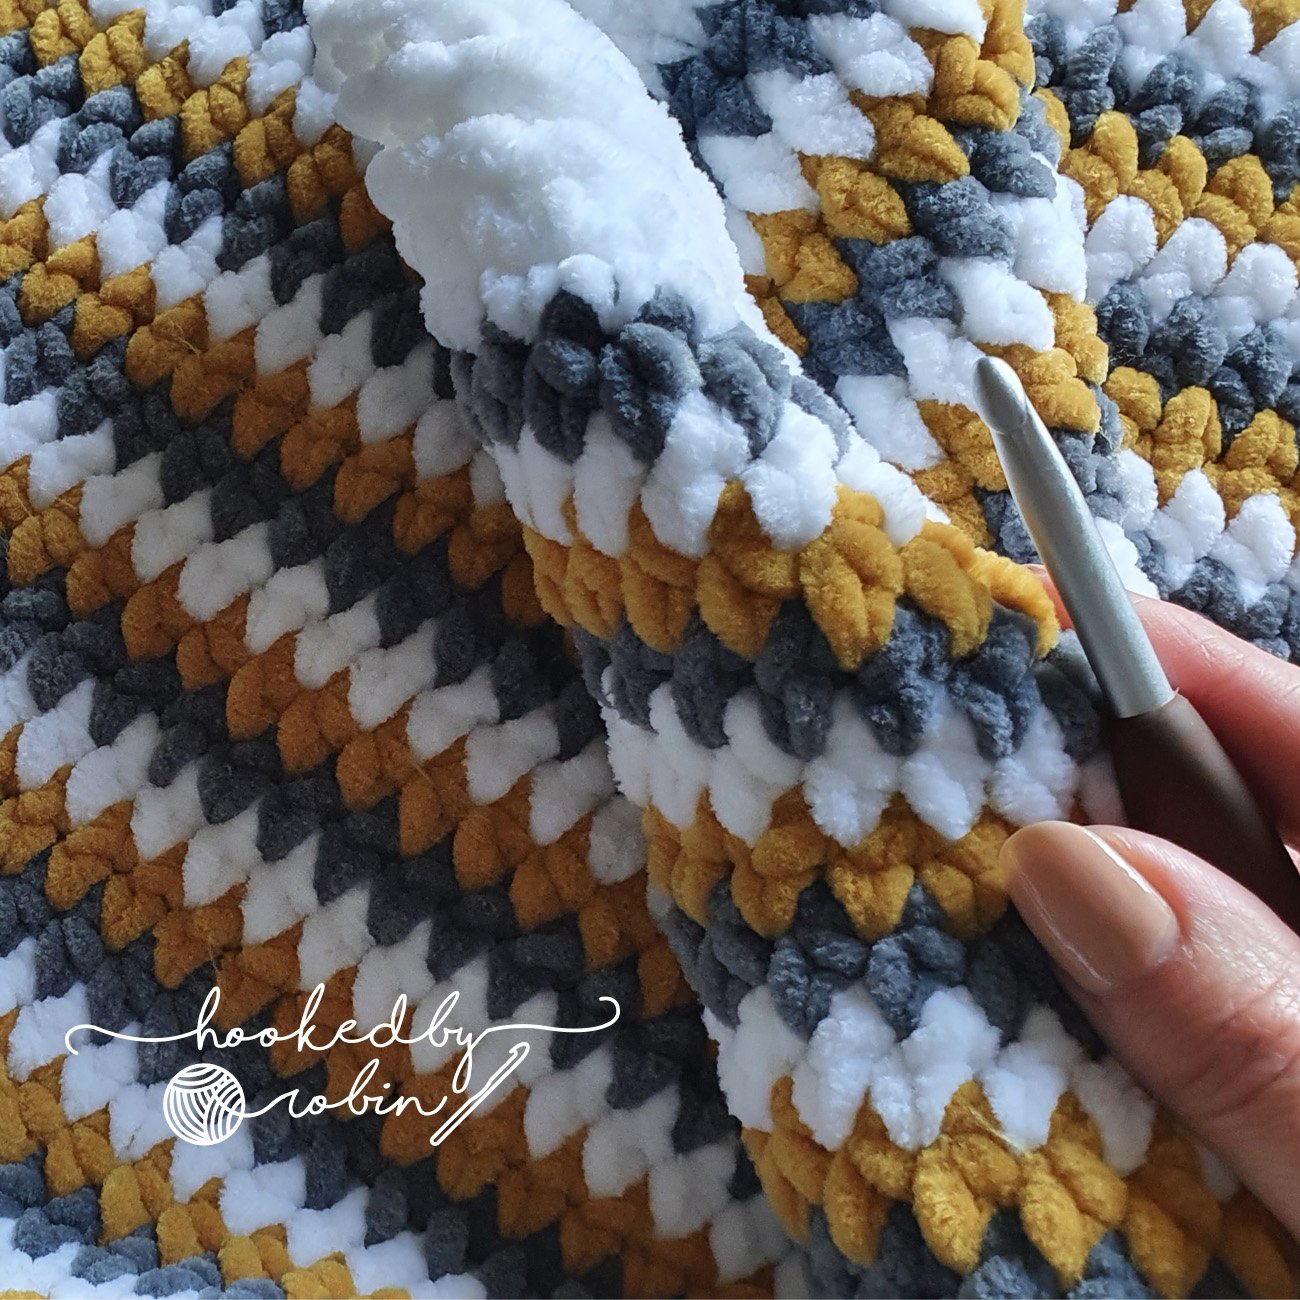 chanel yarn for crocheting